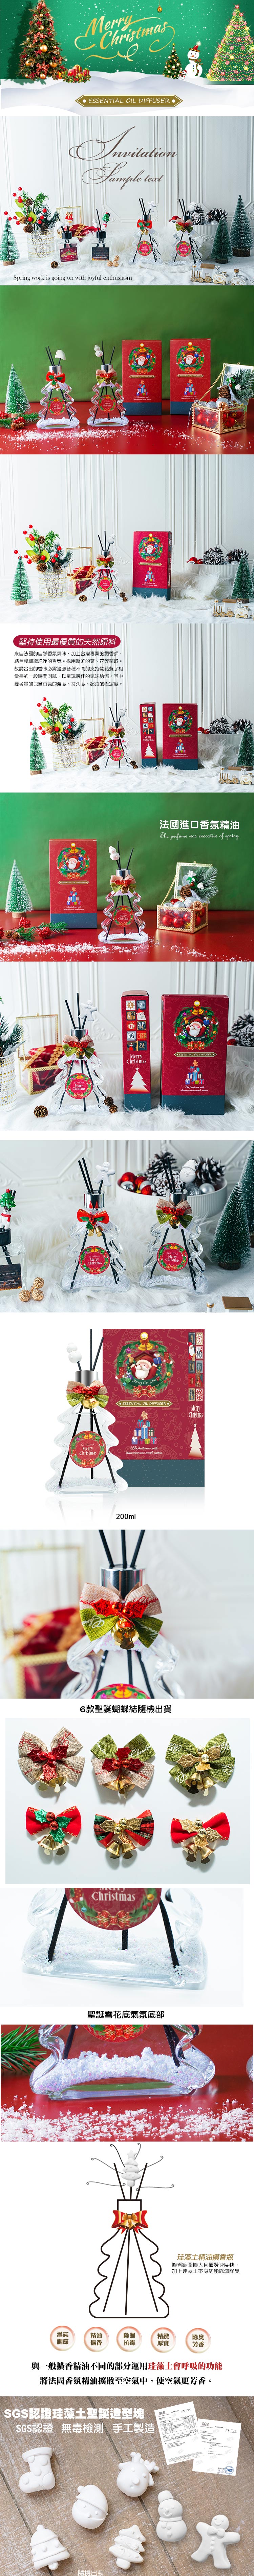 【QIDINA】冬季限定聖誕樹款 質感擴香瓶(約200ML) 室內擴香/精油擴香